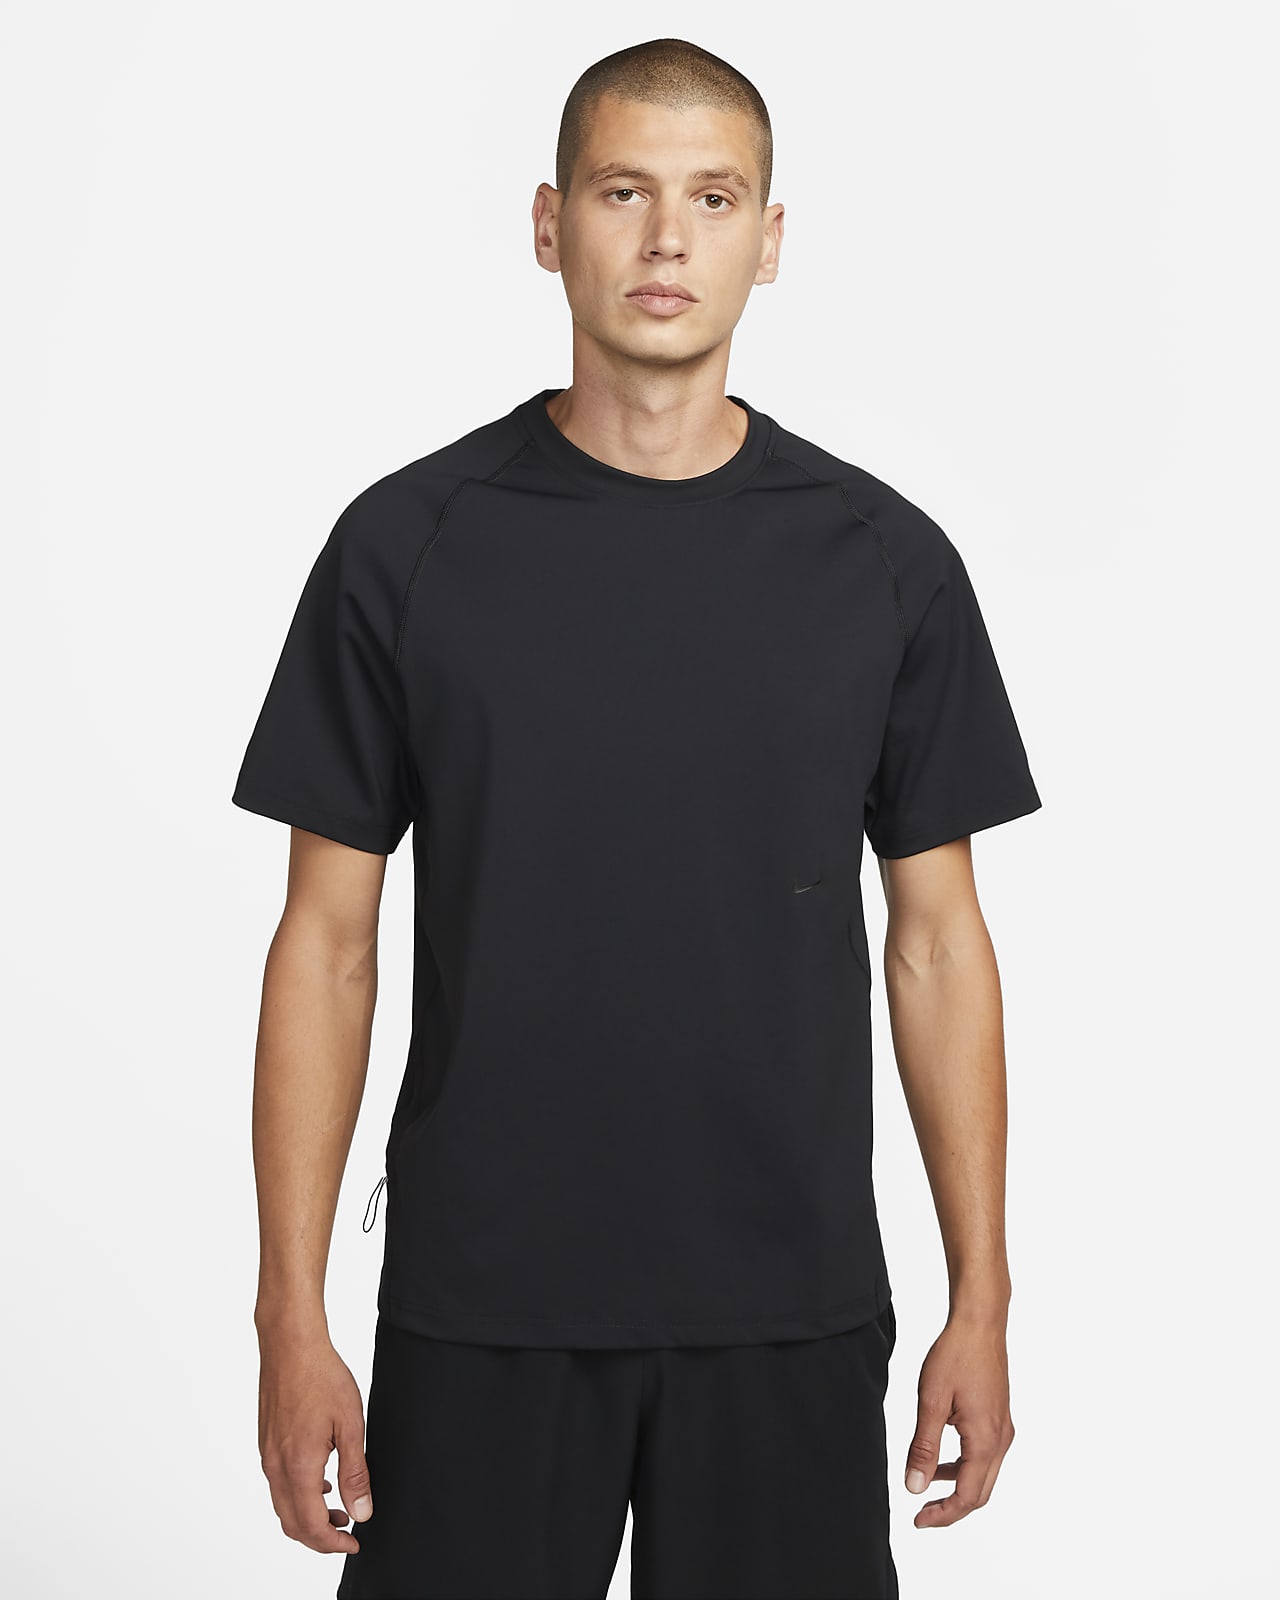 Nike Dri-FIT ADV A.P.S. Men's Short-Sleeve Fitness Top.